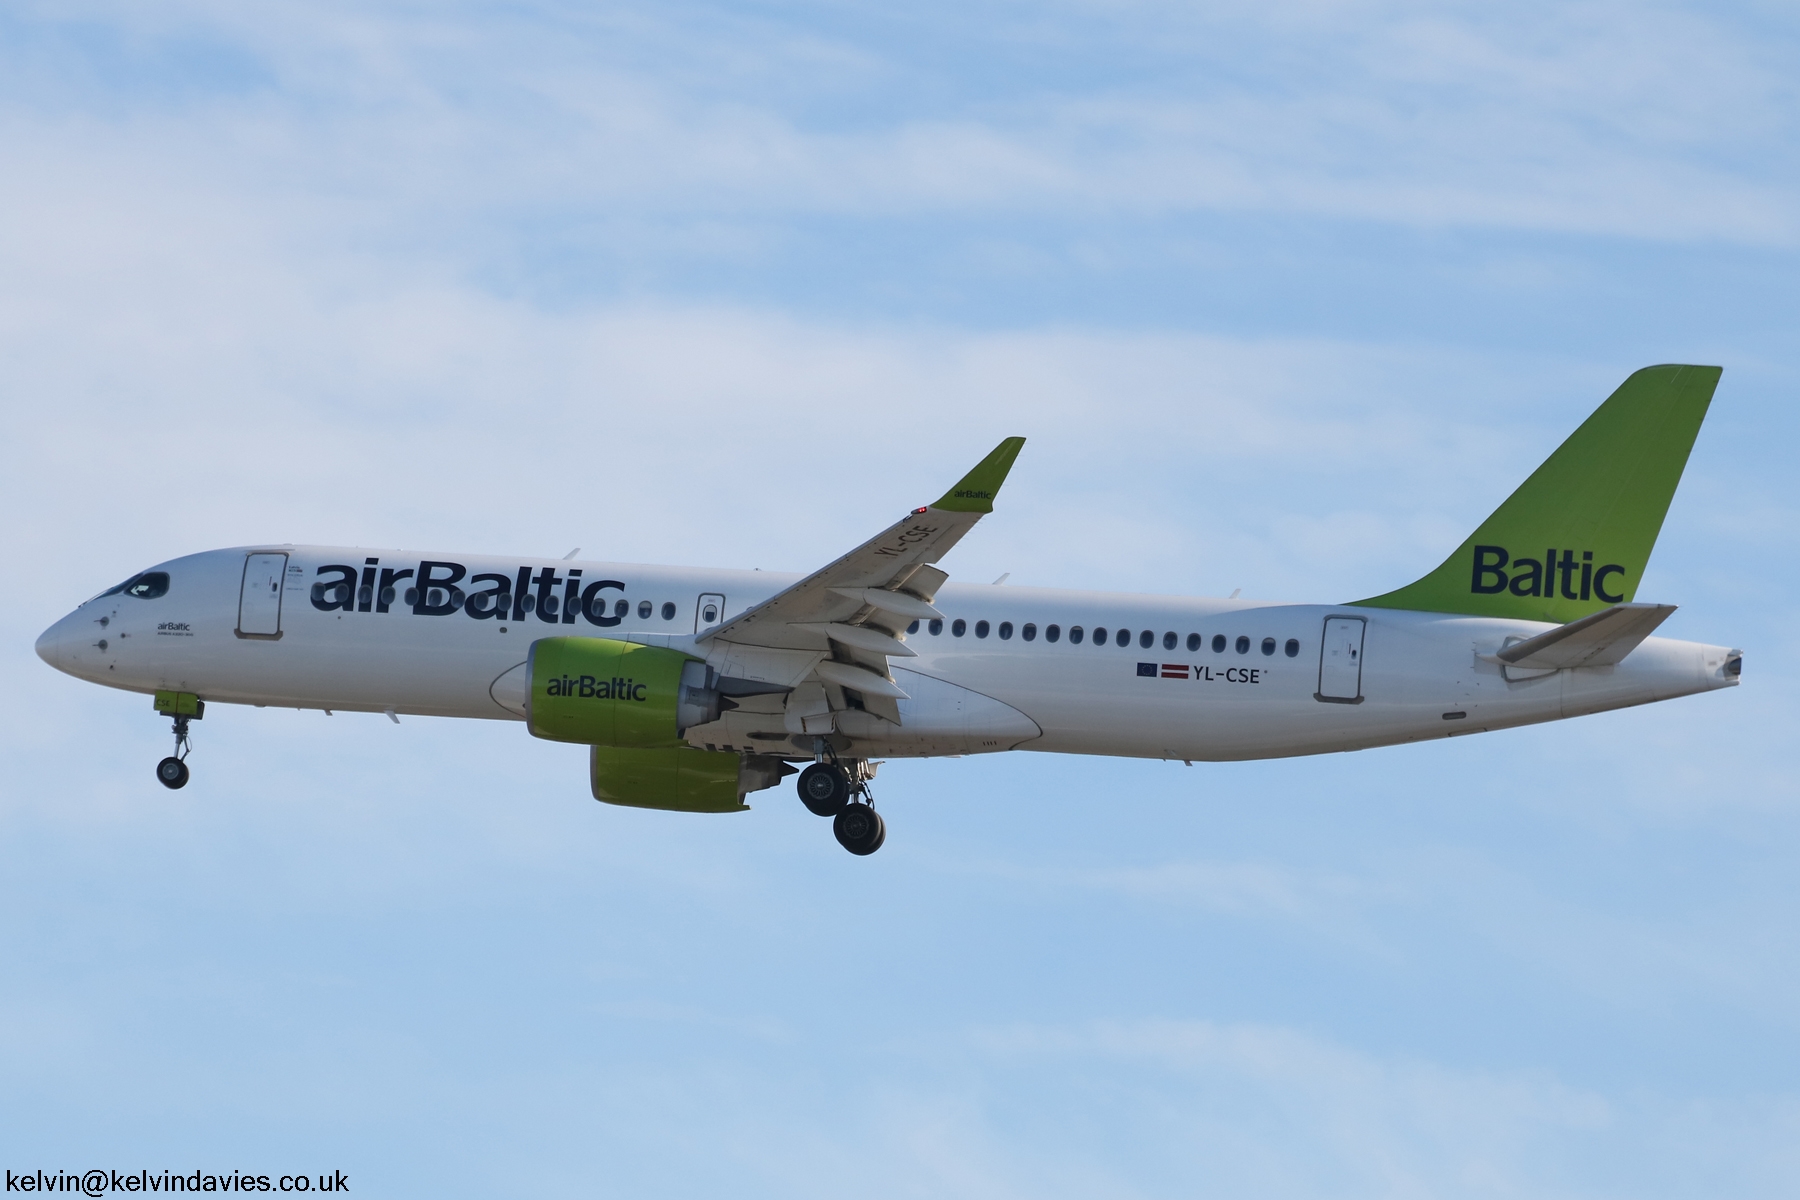 Air Baltic Bombardier C series YL-CSE